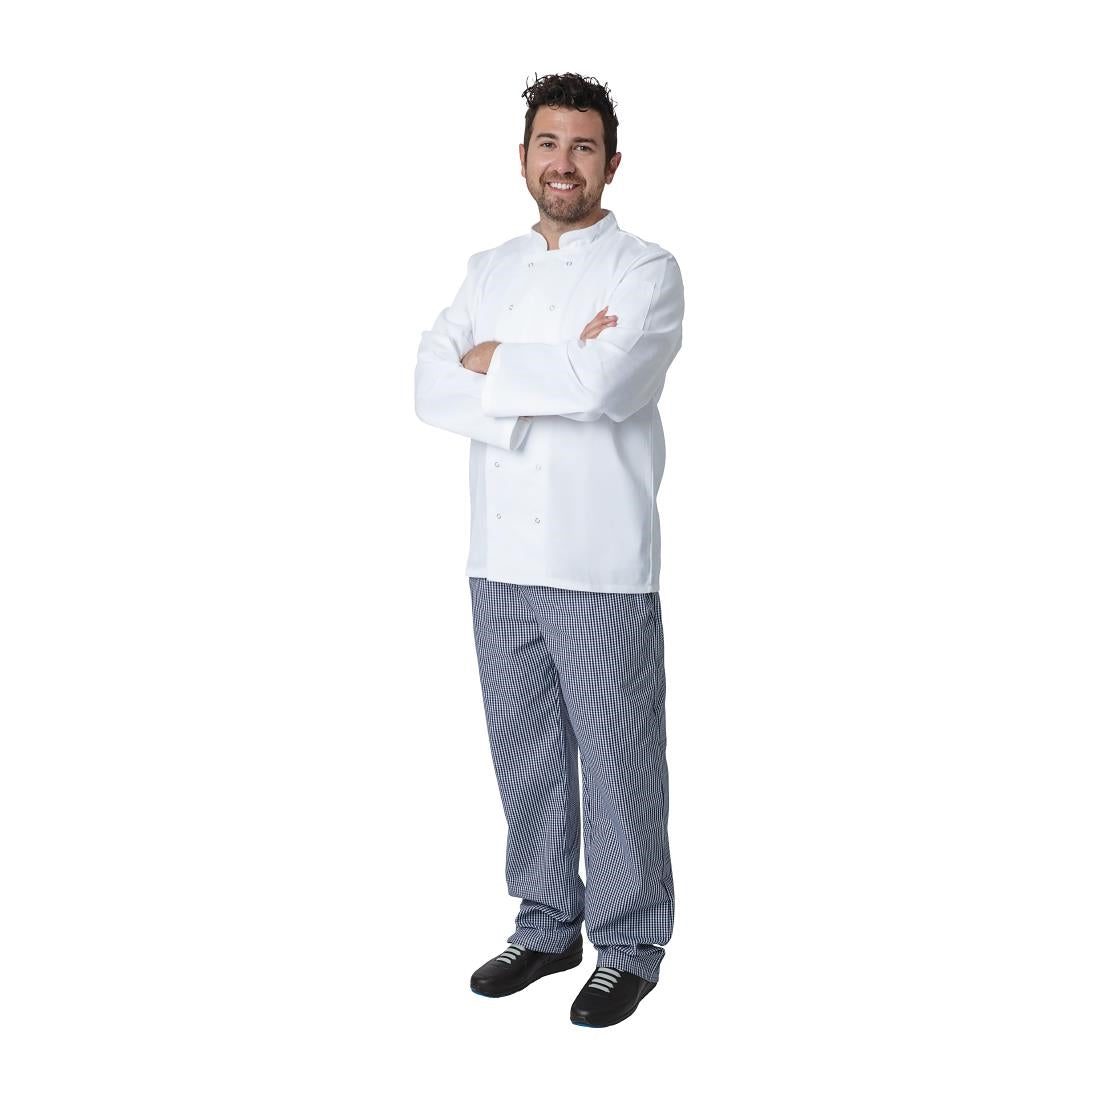 A134-L Whites Vegas Unisex Chefs Jacket Long Sleeve White L JD Catering Equipment Solutions Ltd